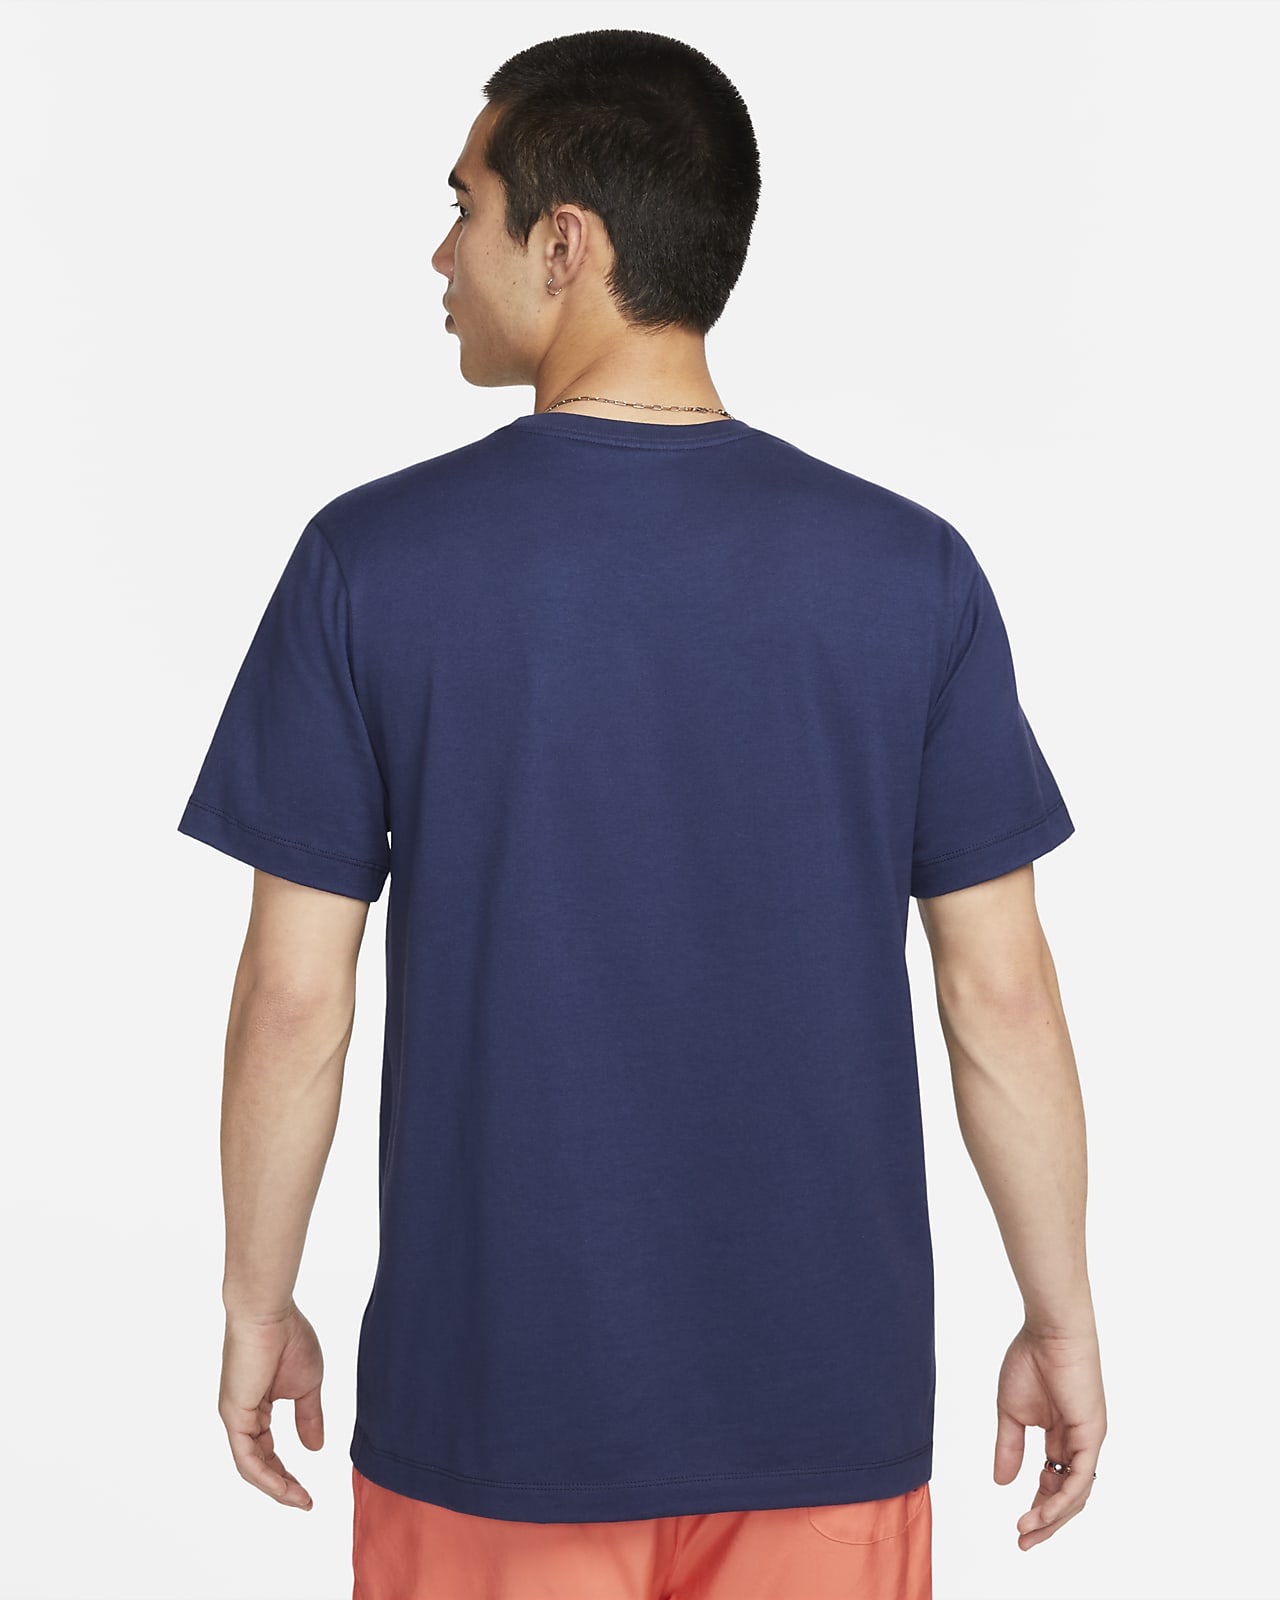 Tee-shirt Nike Sportswear bleu pour homme - Petit logo Nike